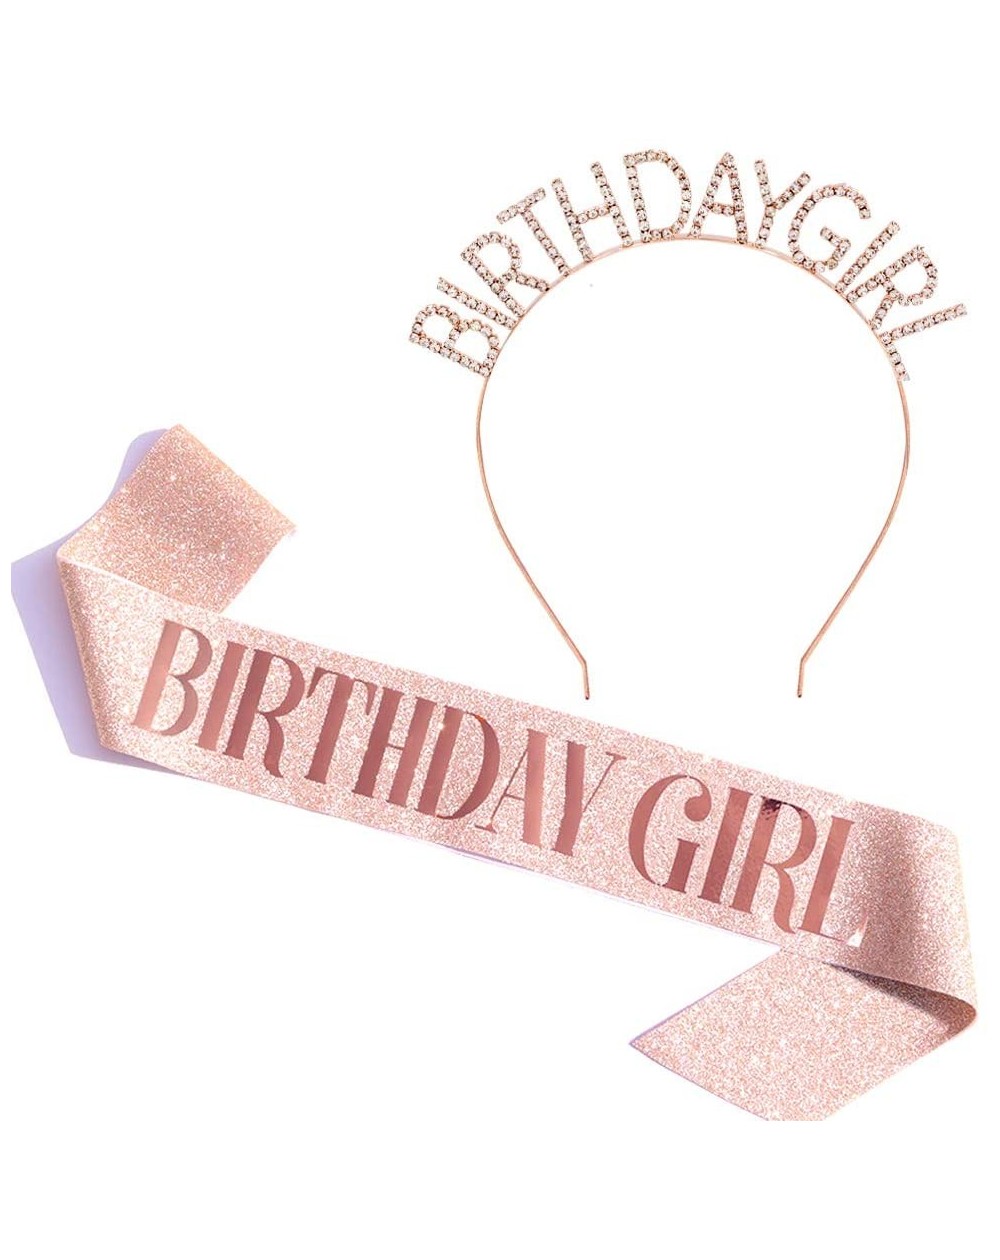 Favors Birthday Girl Sash & Rhinestone Headband Set - Birthday Sash Birthday Gifts for Women Birthday Party Supplies (Rose Go...